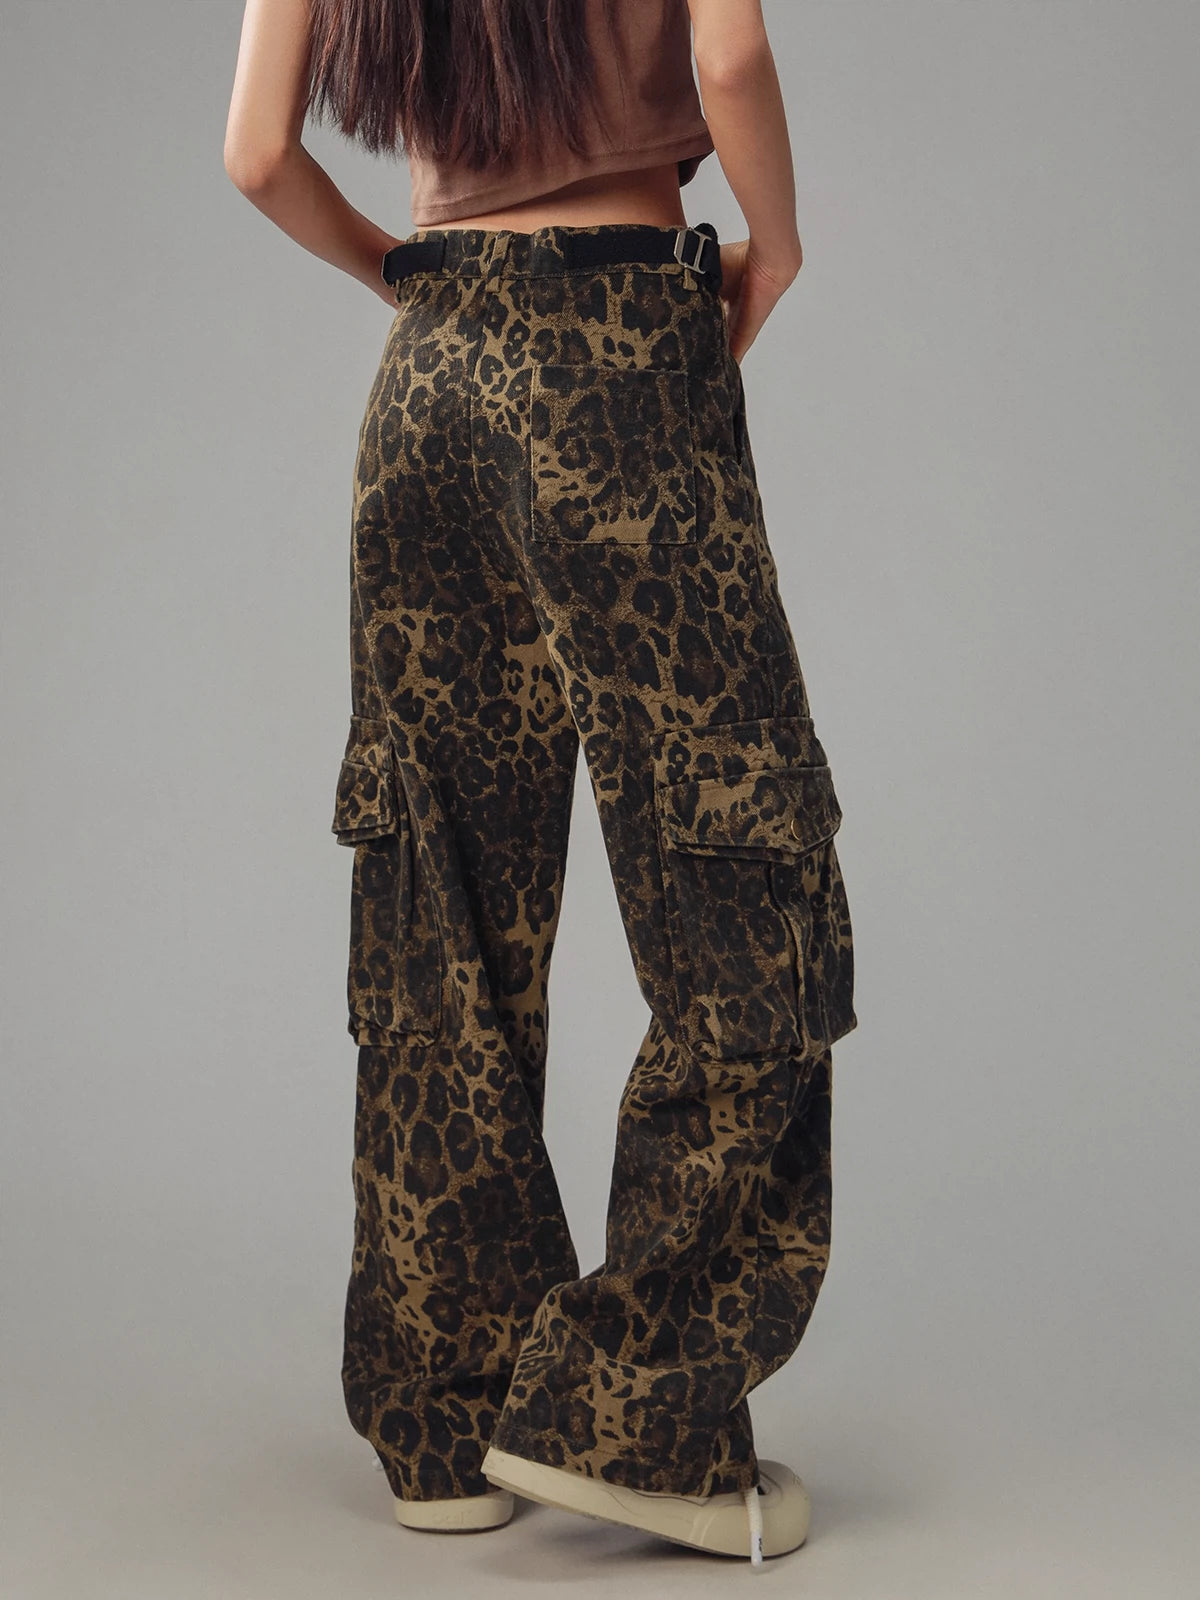 American Retro Leopard Print Pocket Pants